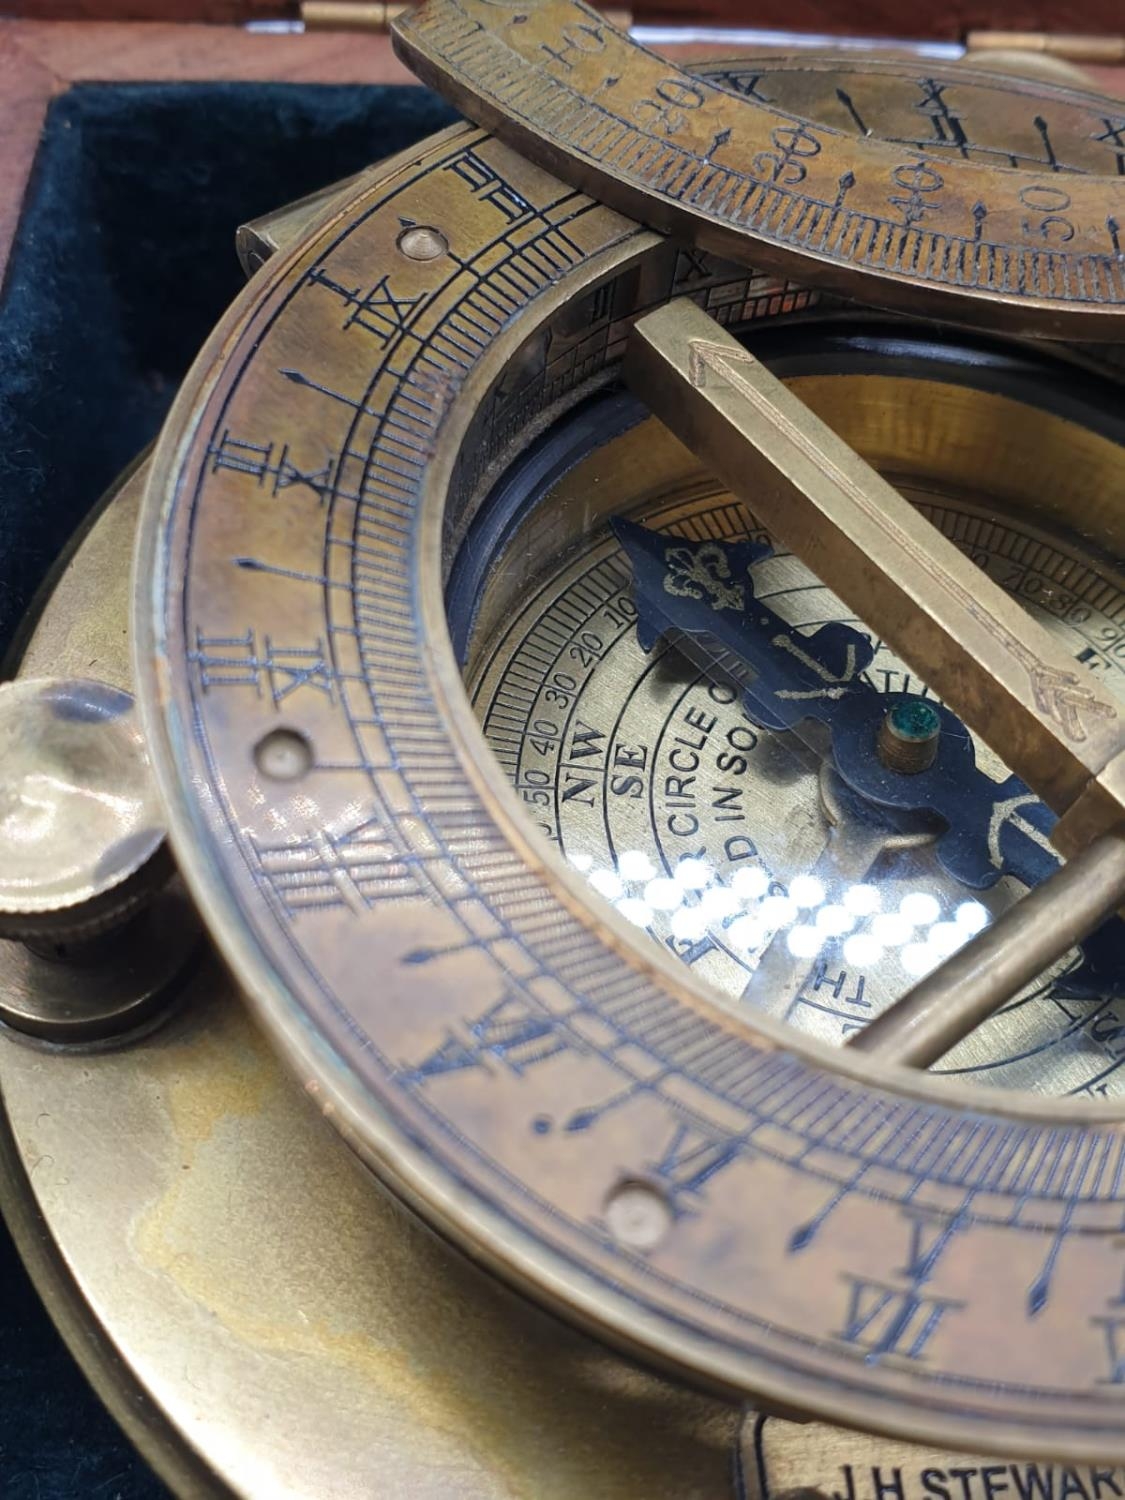 J.H.Steward of Strand London brass compass and sundial circa 1950 in custom made box (12x12cm) - Image 6 of 9